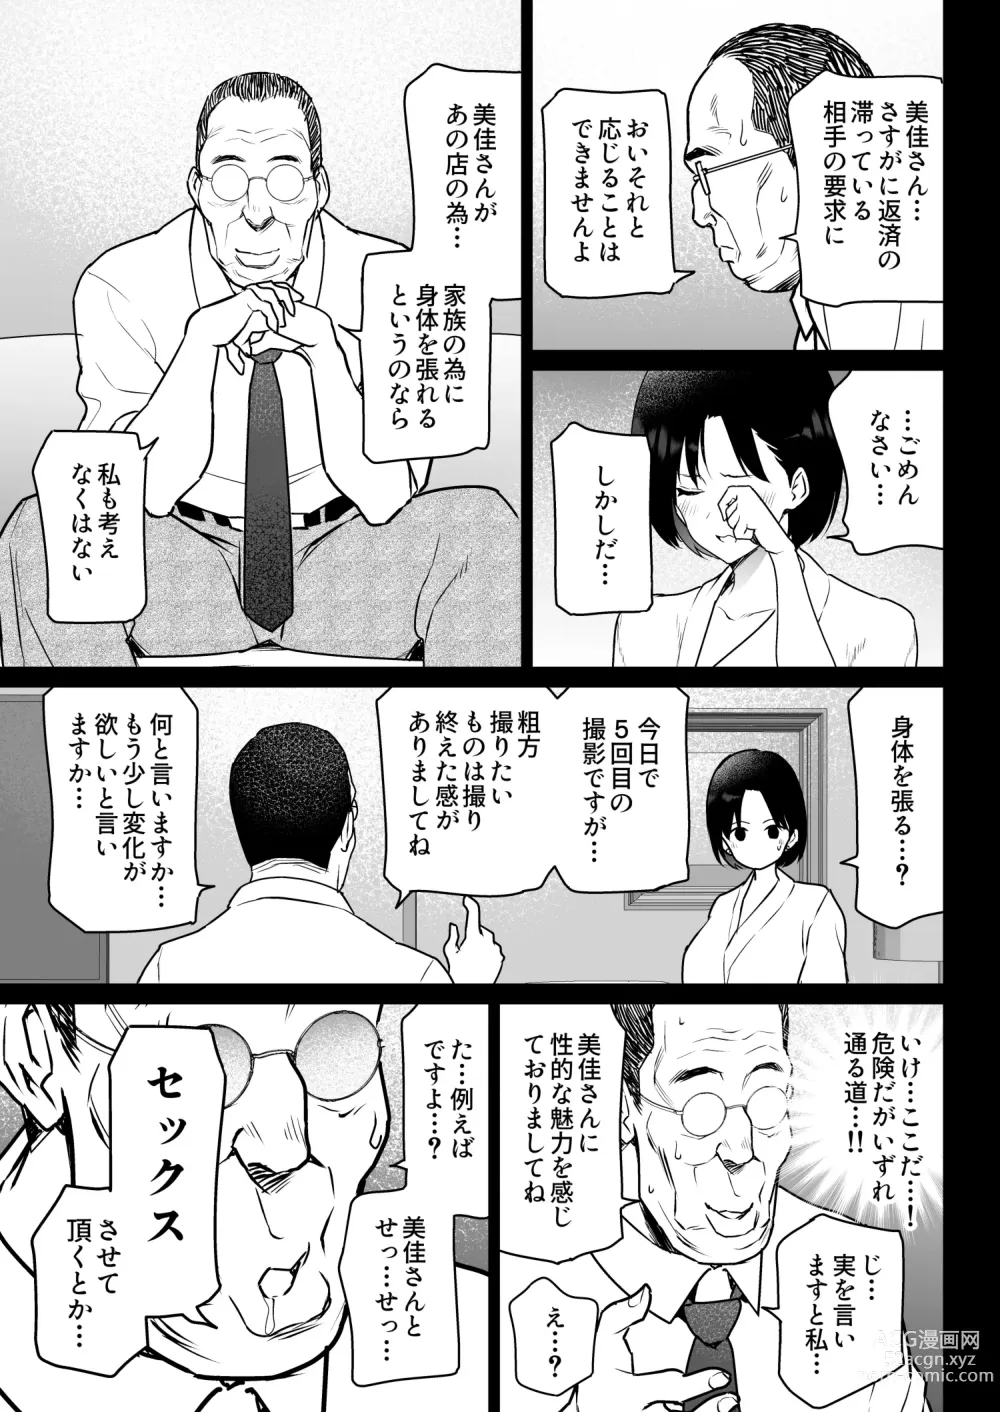 Page 16 of doujinshi Oshidori Fuufu Yakitorare